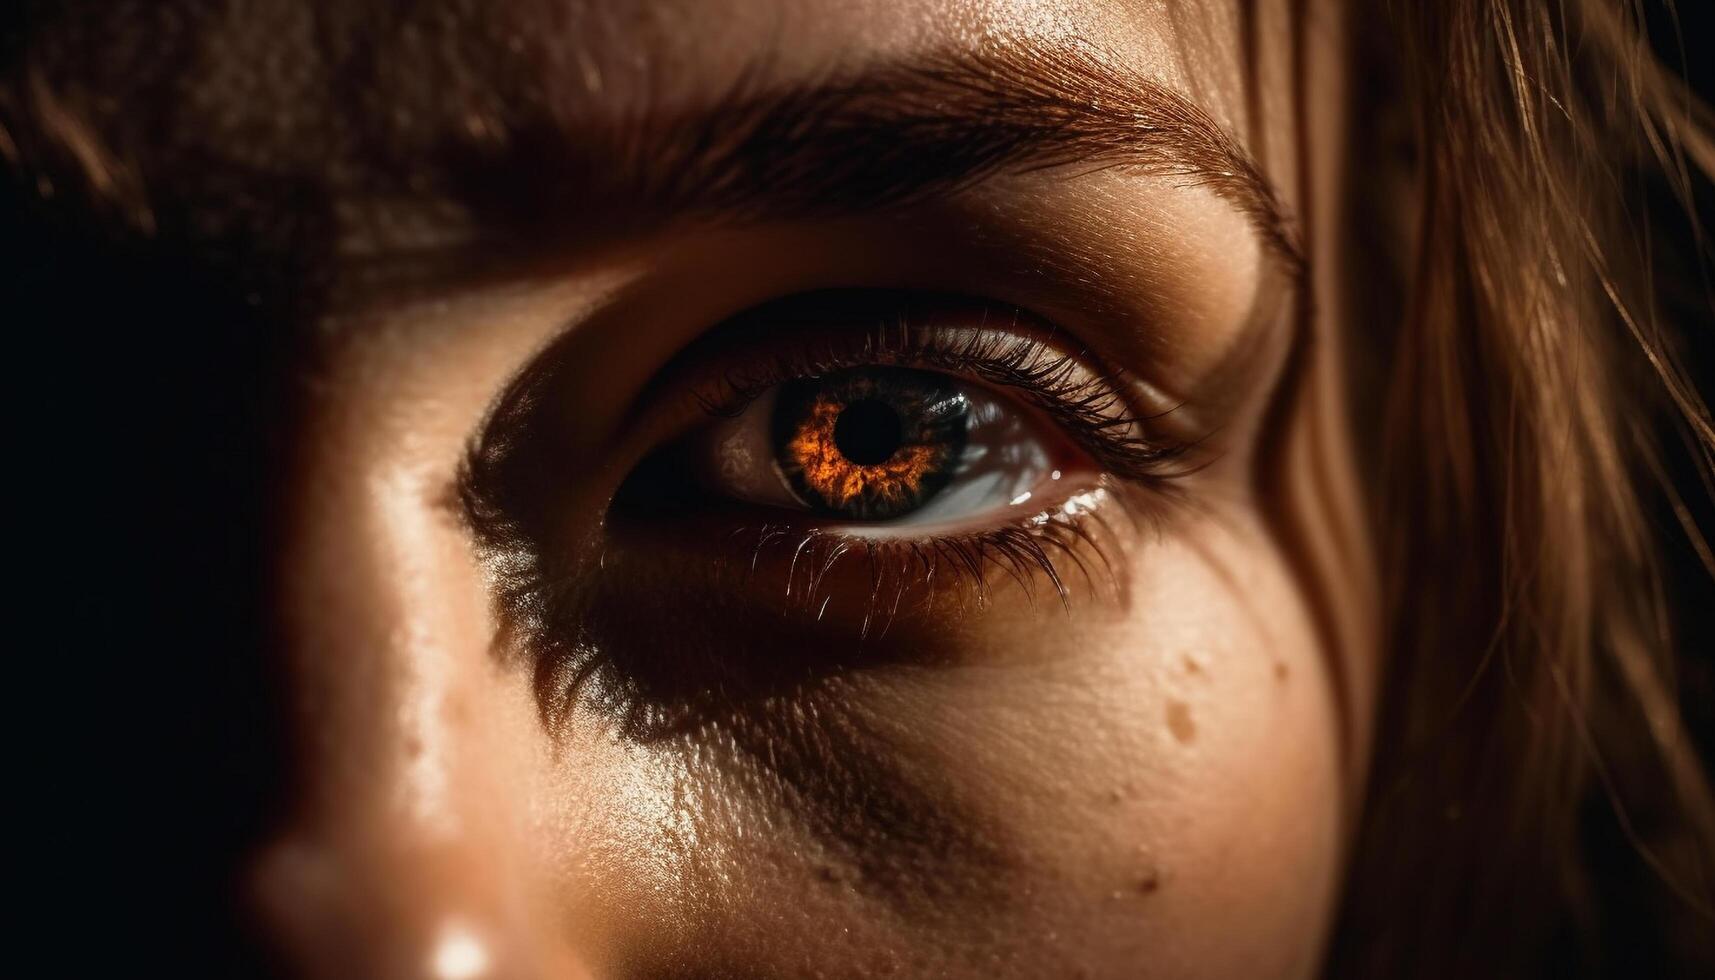 Beautiful young woman staring sensually at camera with brown eyes generated by AI photo